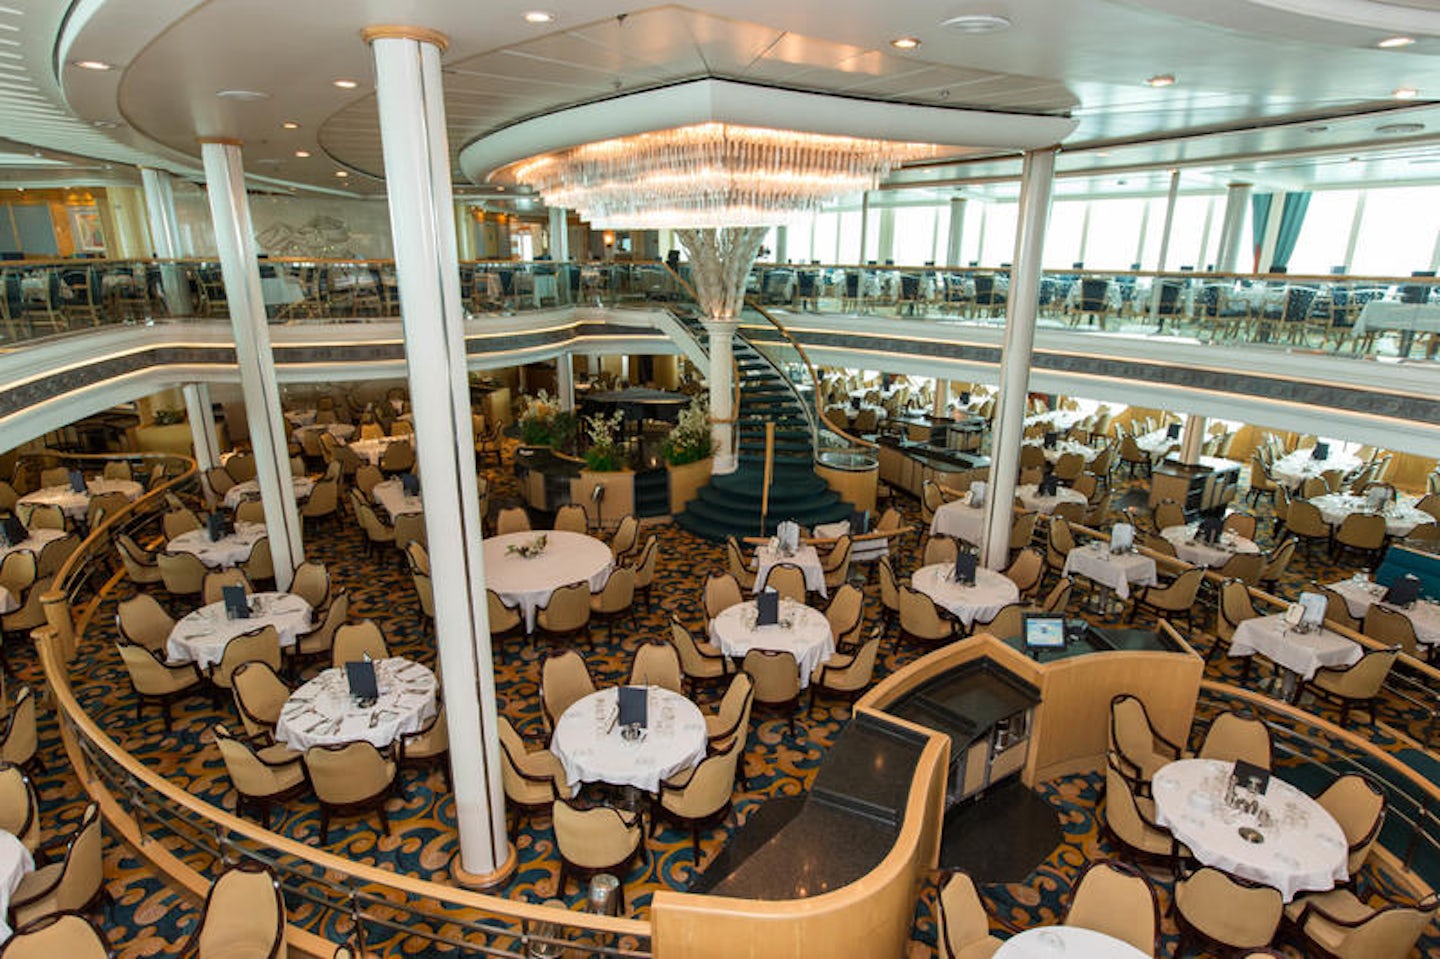 Aquarius Dining Room on Vision of the Seas